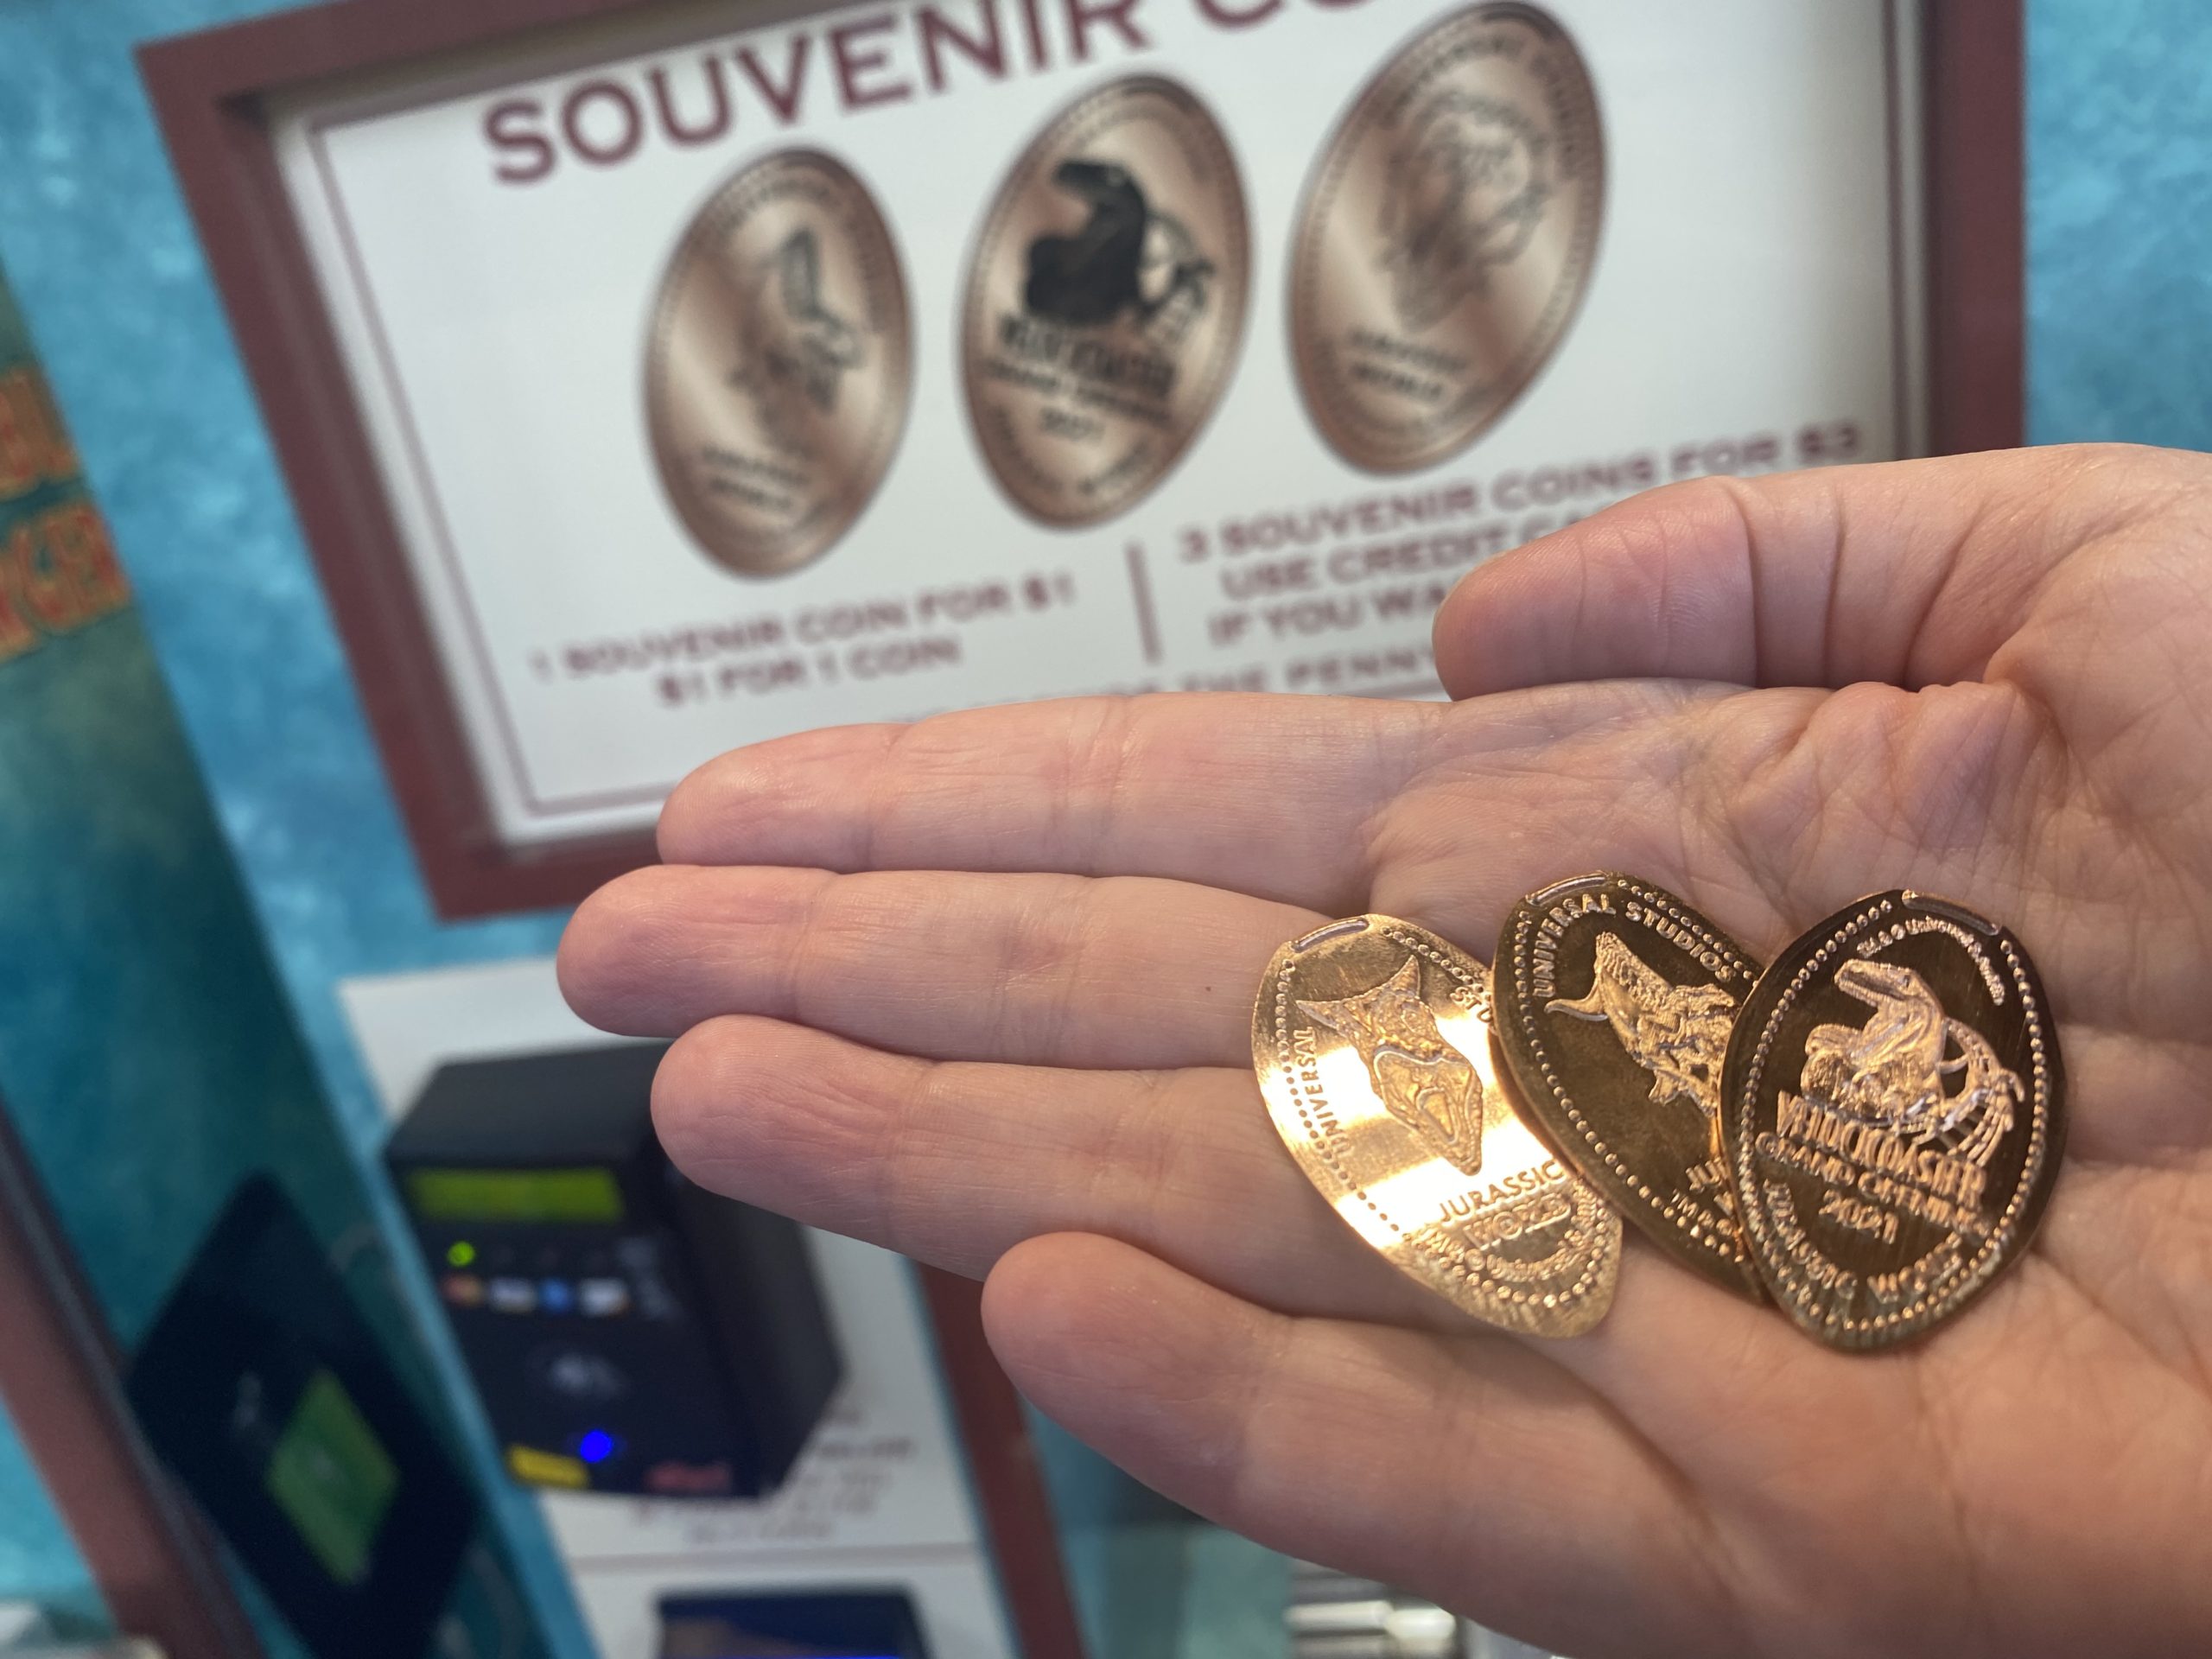 Favorite Souvenirs At Disney World: Pressed Pennies